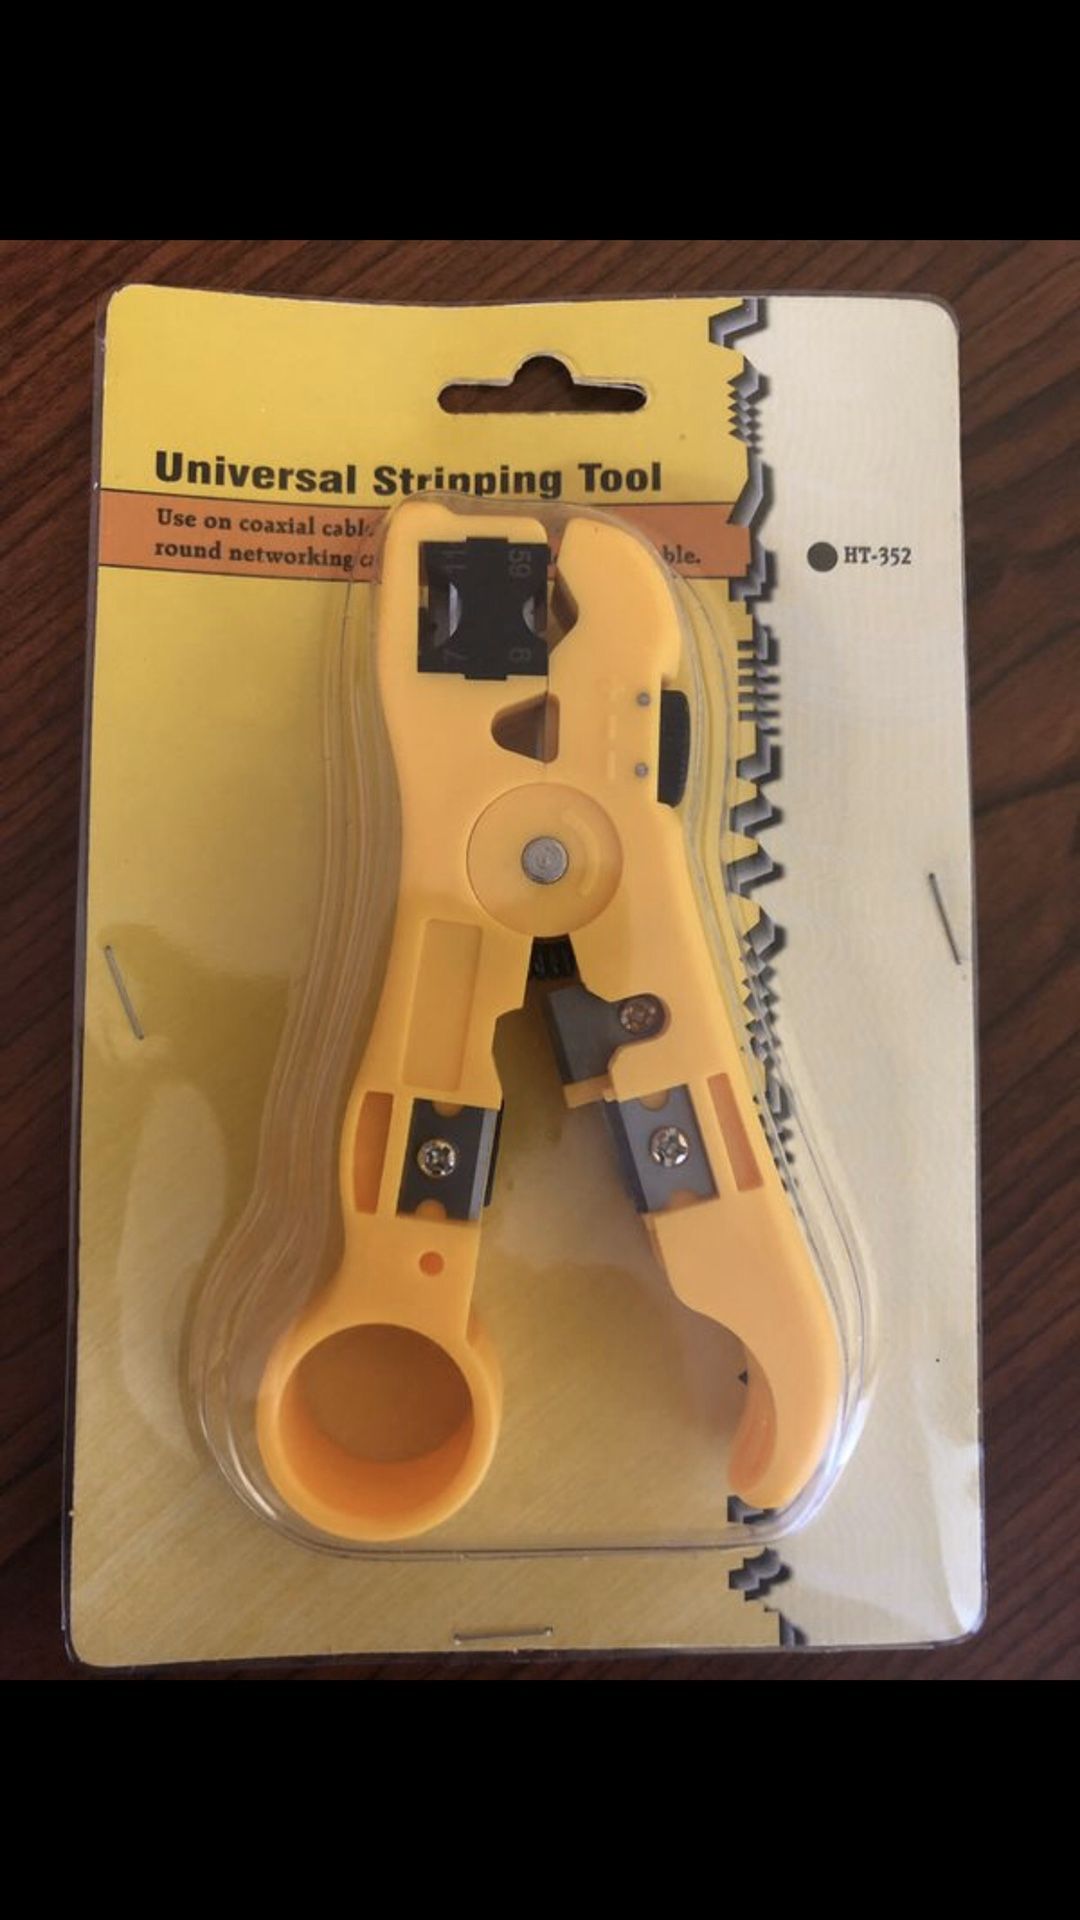 Universal Stripping Tool